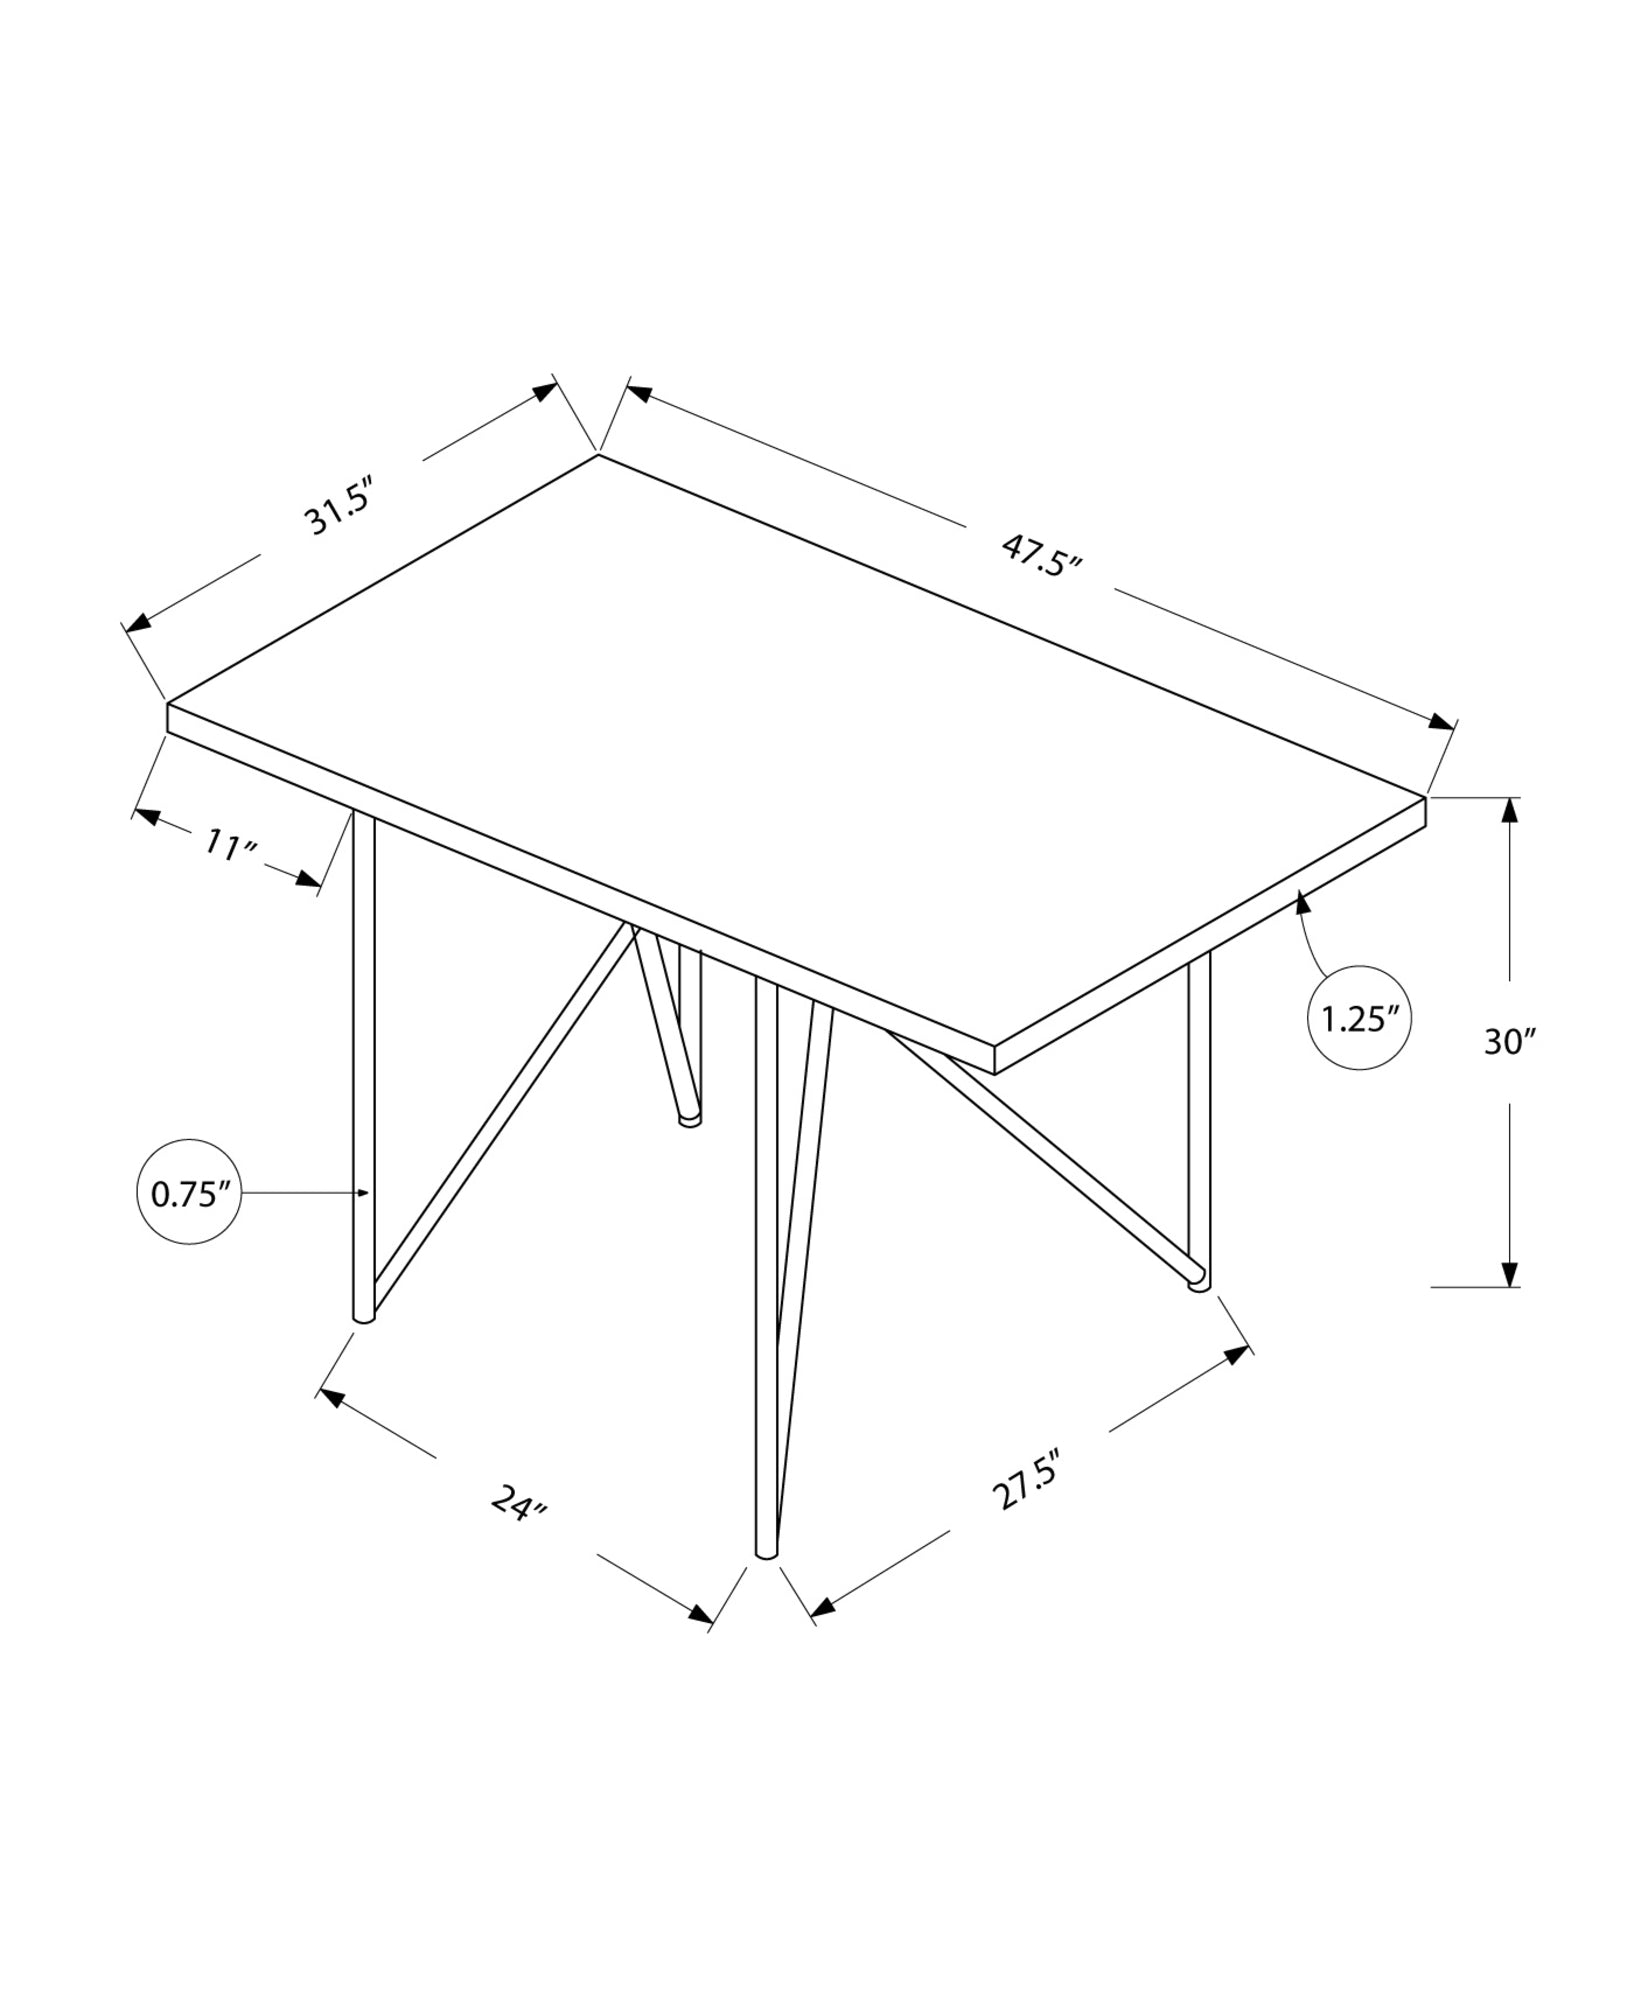 MN-211039    Dining Table, 48" Rectangular, Metal, Kitchen, Dining Room, Metal Base, Laminate, Dark Brown, Chrome, Contemporary, Modern